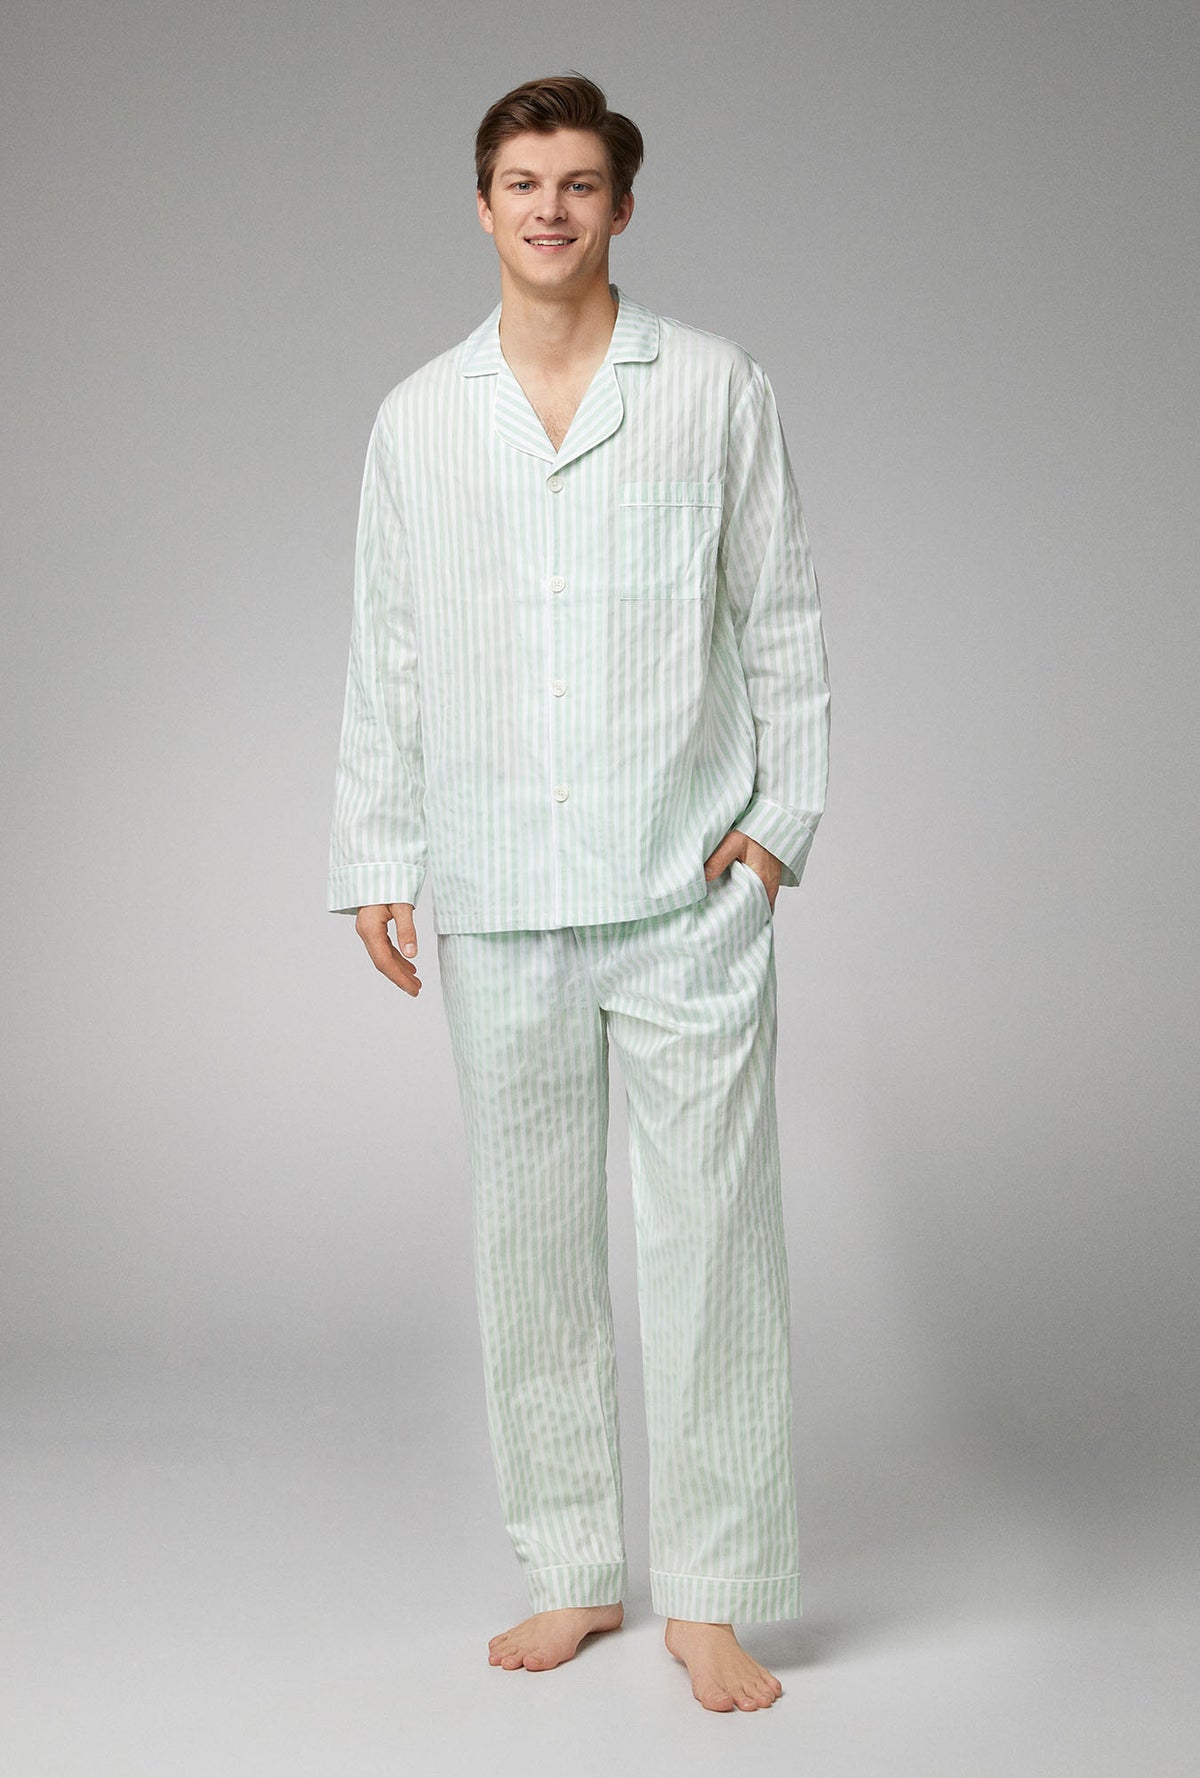 Mint 3D Stripe Men's Long Sleeve Classic Woven Cotton Poplin PJ Set -  Bedhead Pajamas